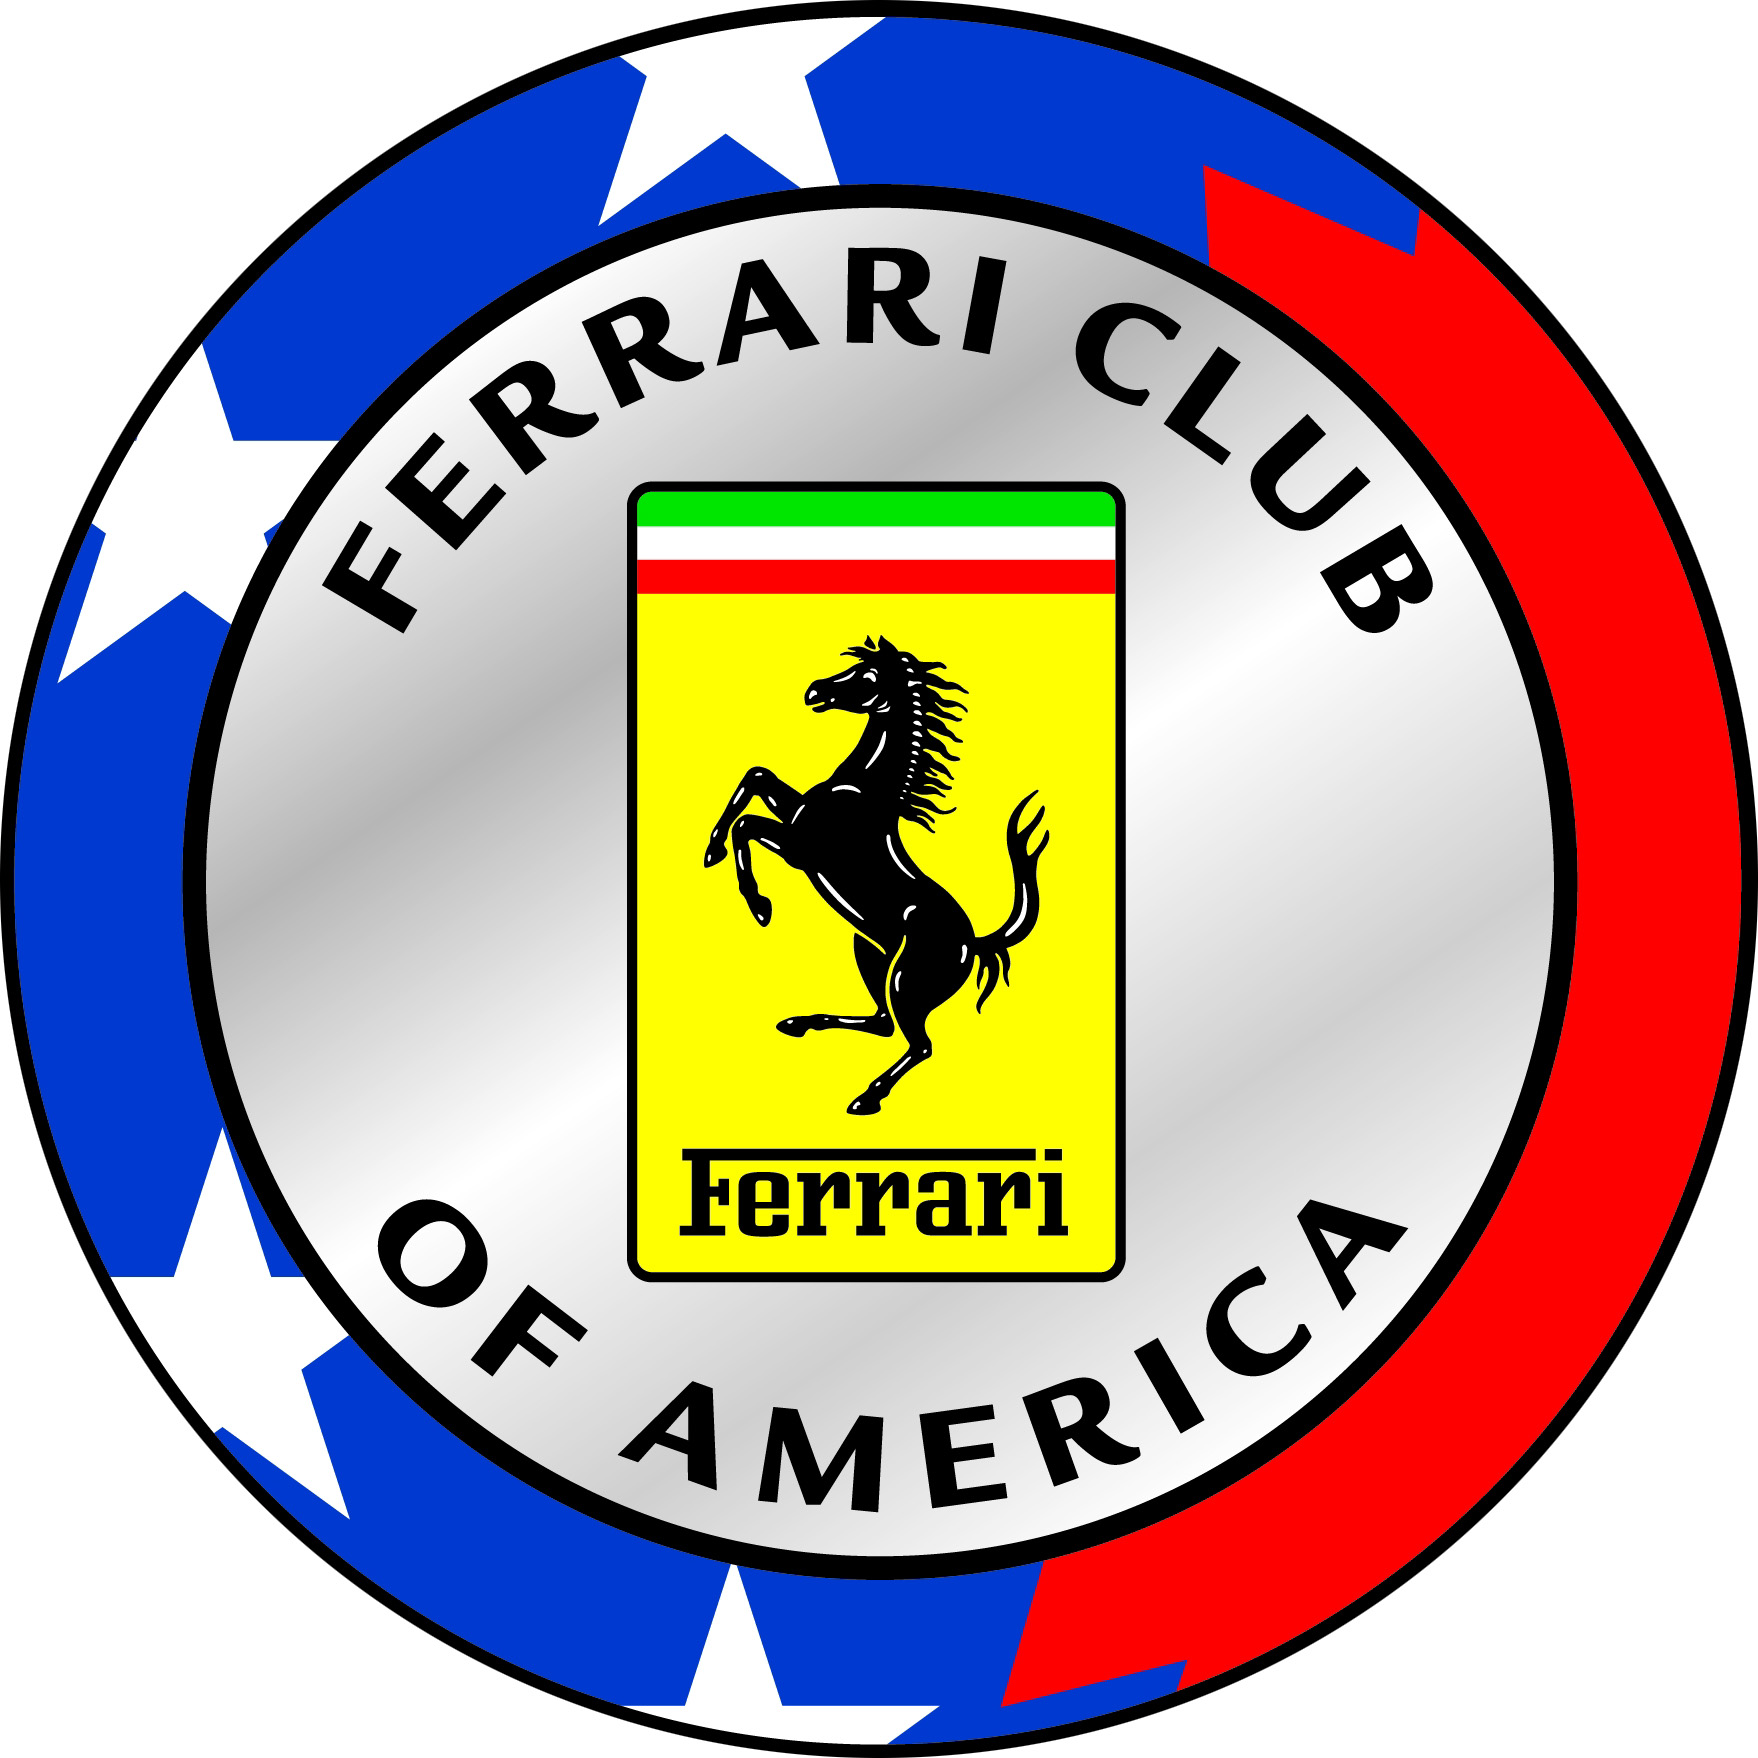 Business Cards for Ferrari Club of America Las Vegas Chapter Members